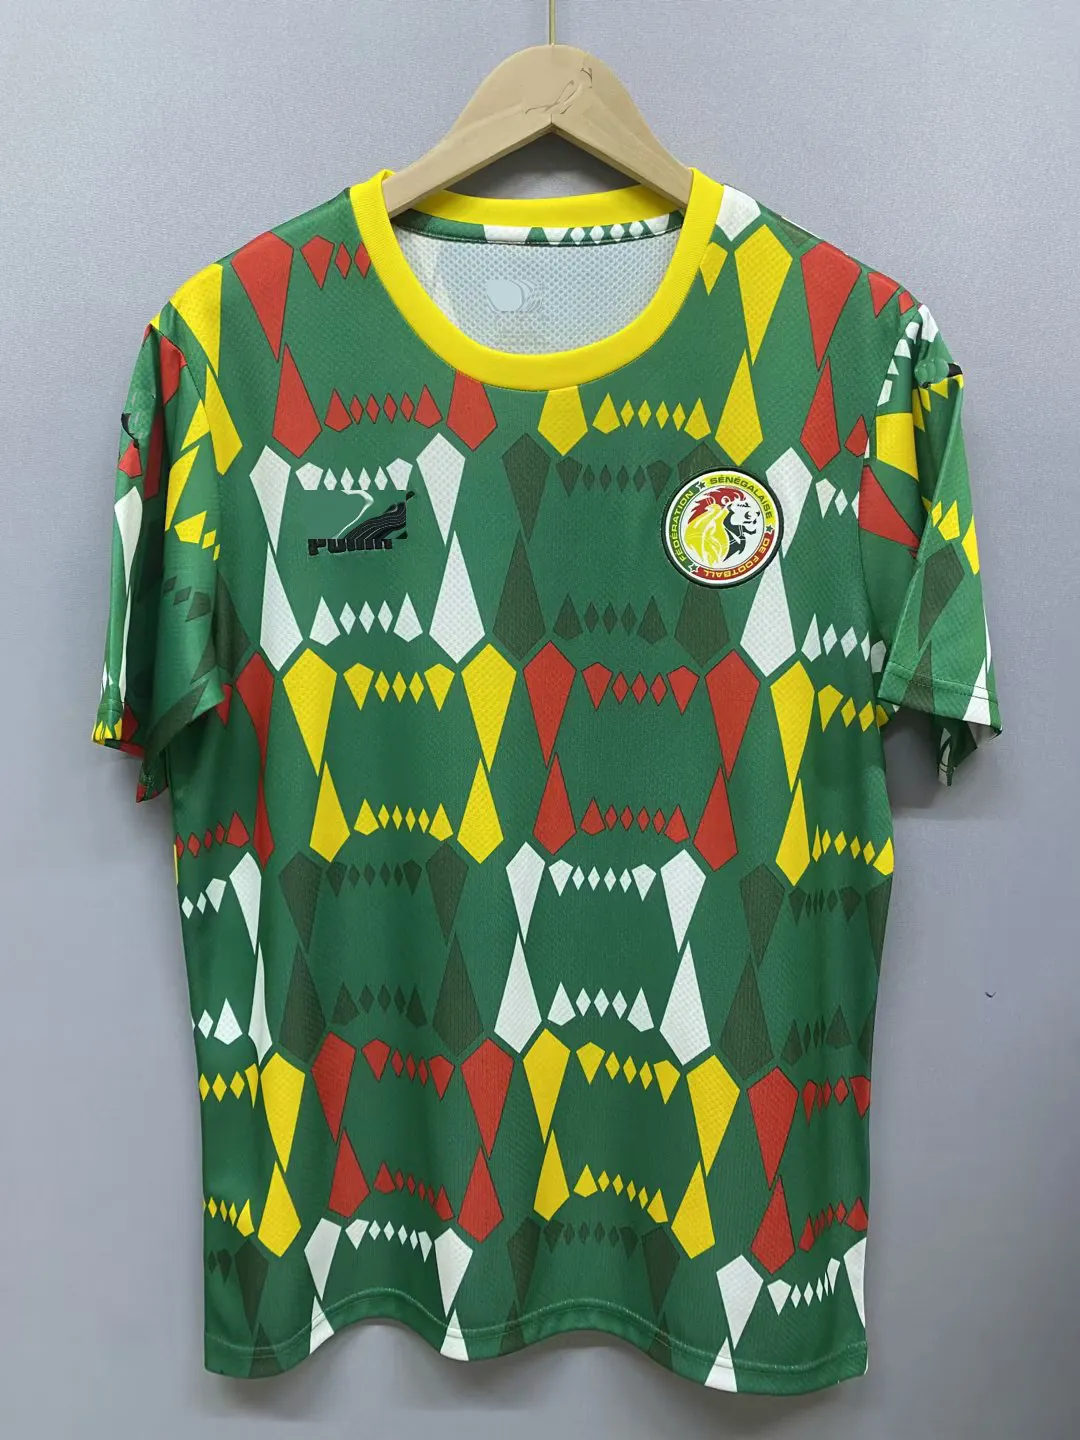 23/24 Senegal Mannen T-shirts Zomer Vrijetijdsbesteding Sport Ademende Stof Badge Borduren Outdoor Casual Sport Professionele Shirt S-2XL